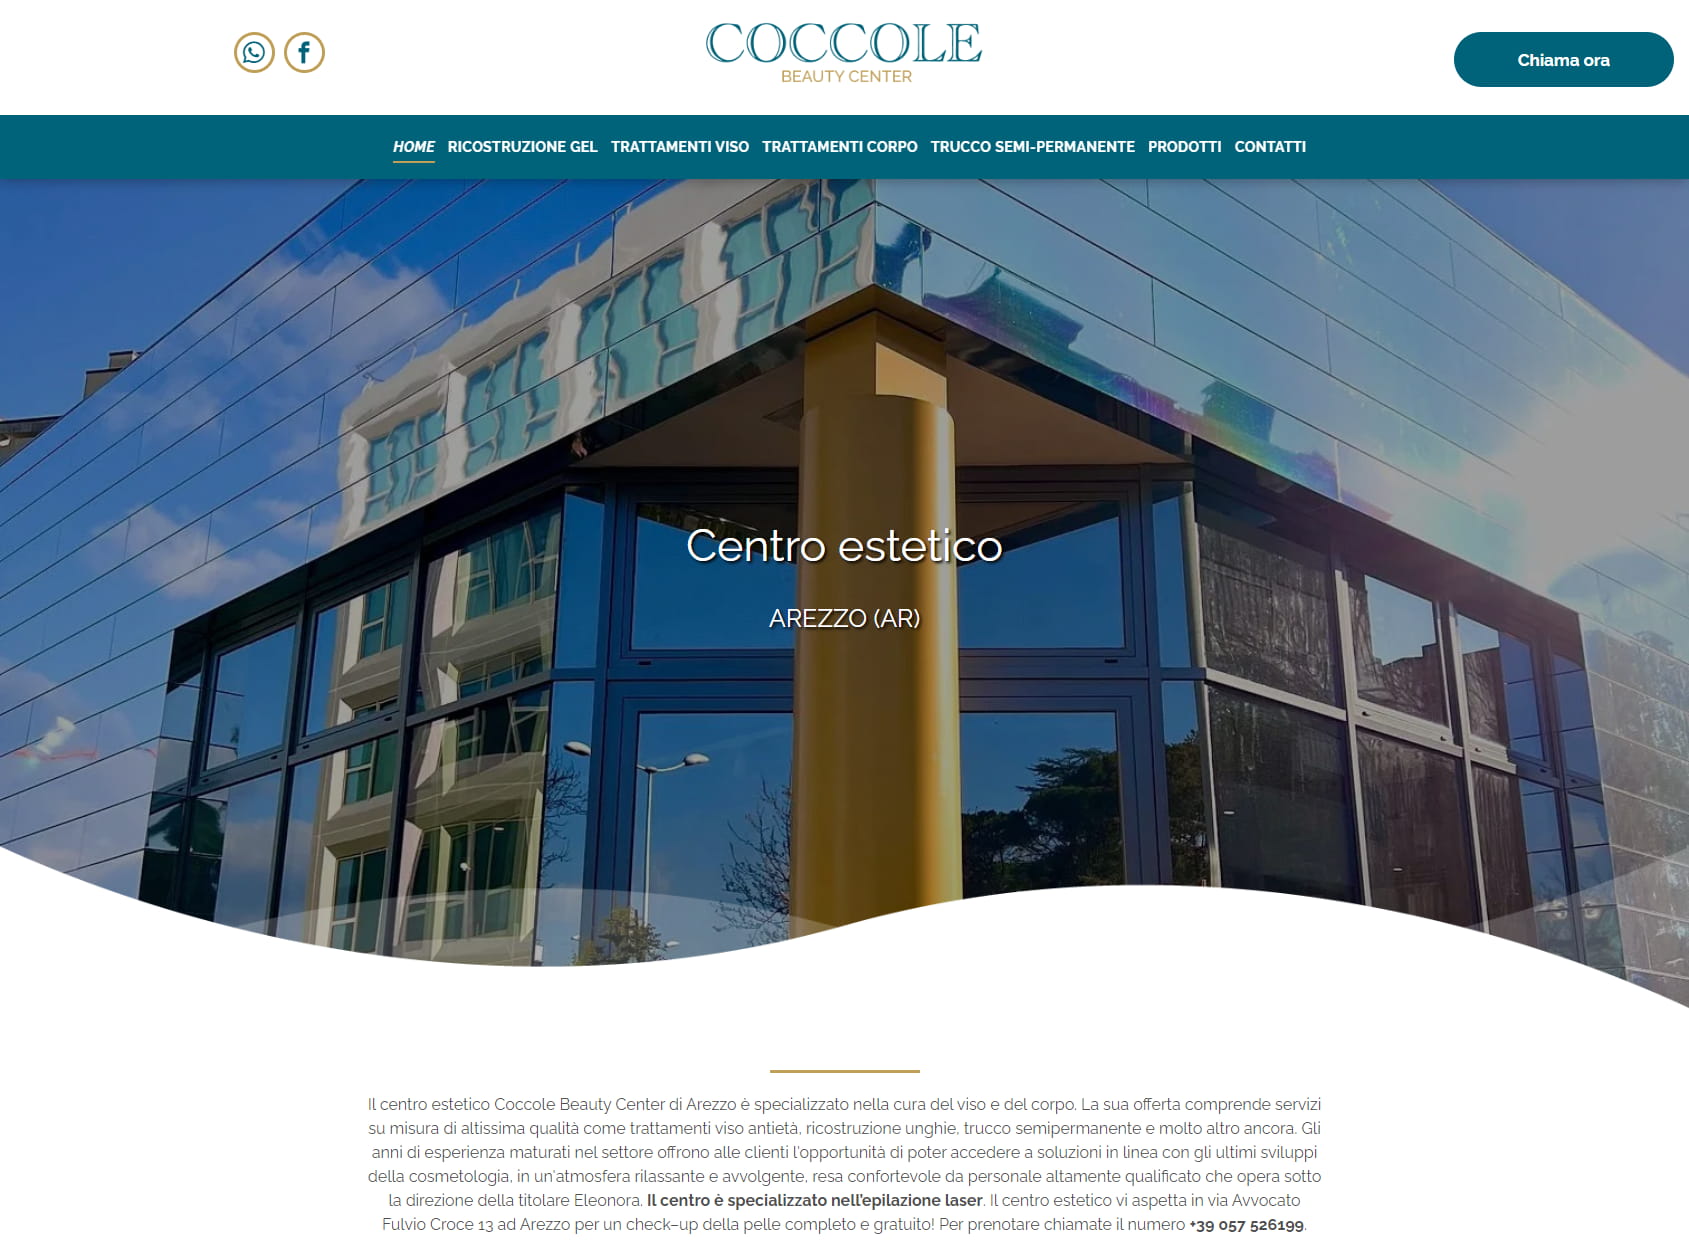 Coccole Beauty Center